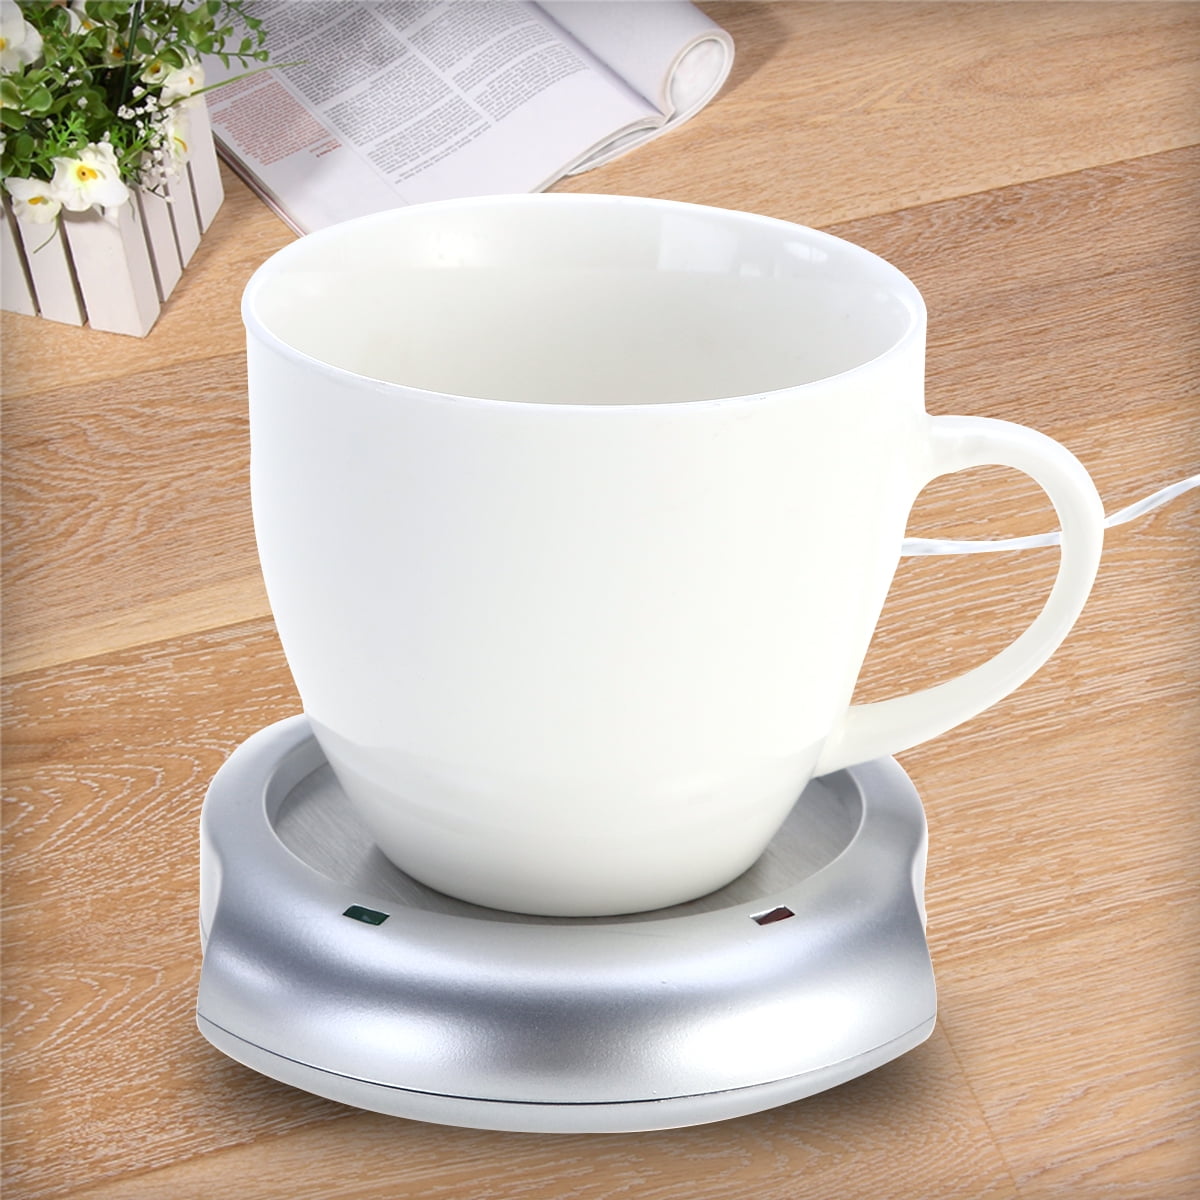 Mind Reader USB Coffee Mug Warmer for Desk, Tea Cup Warmer